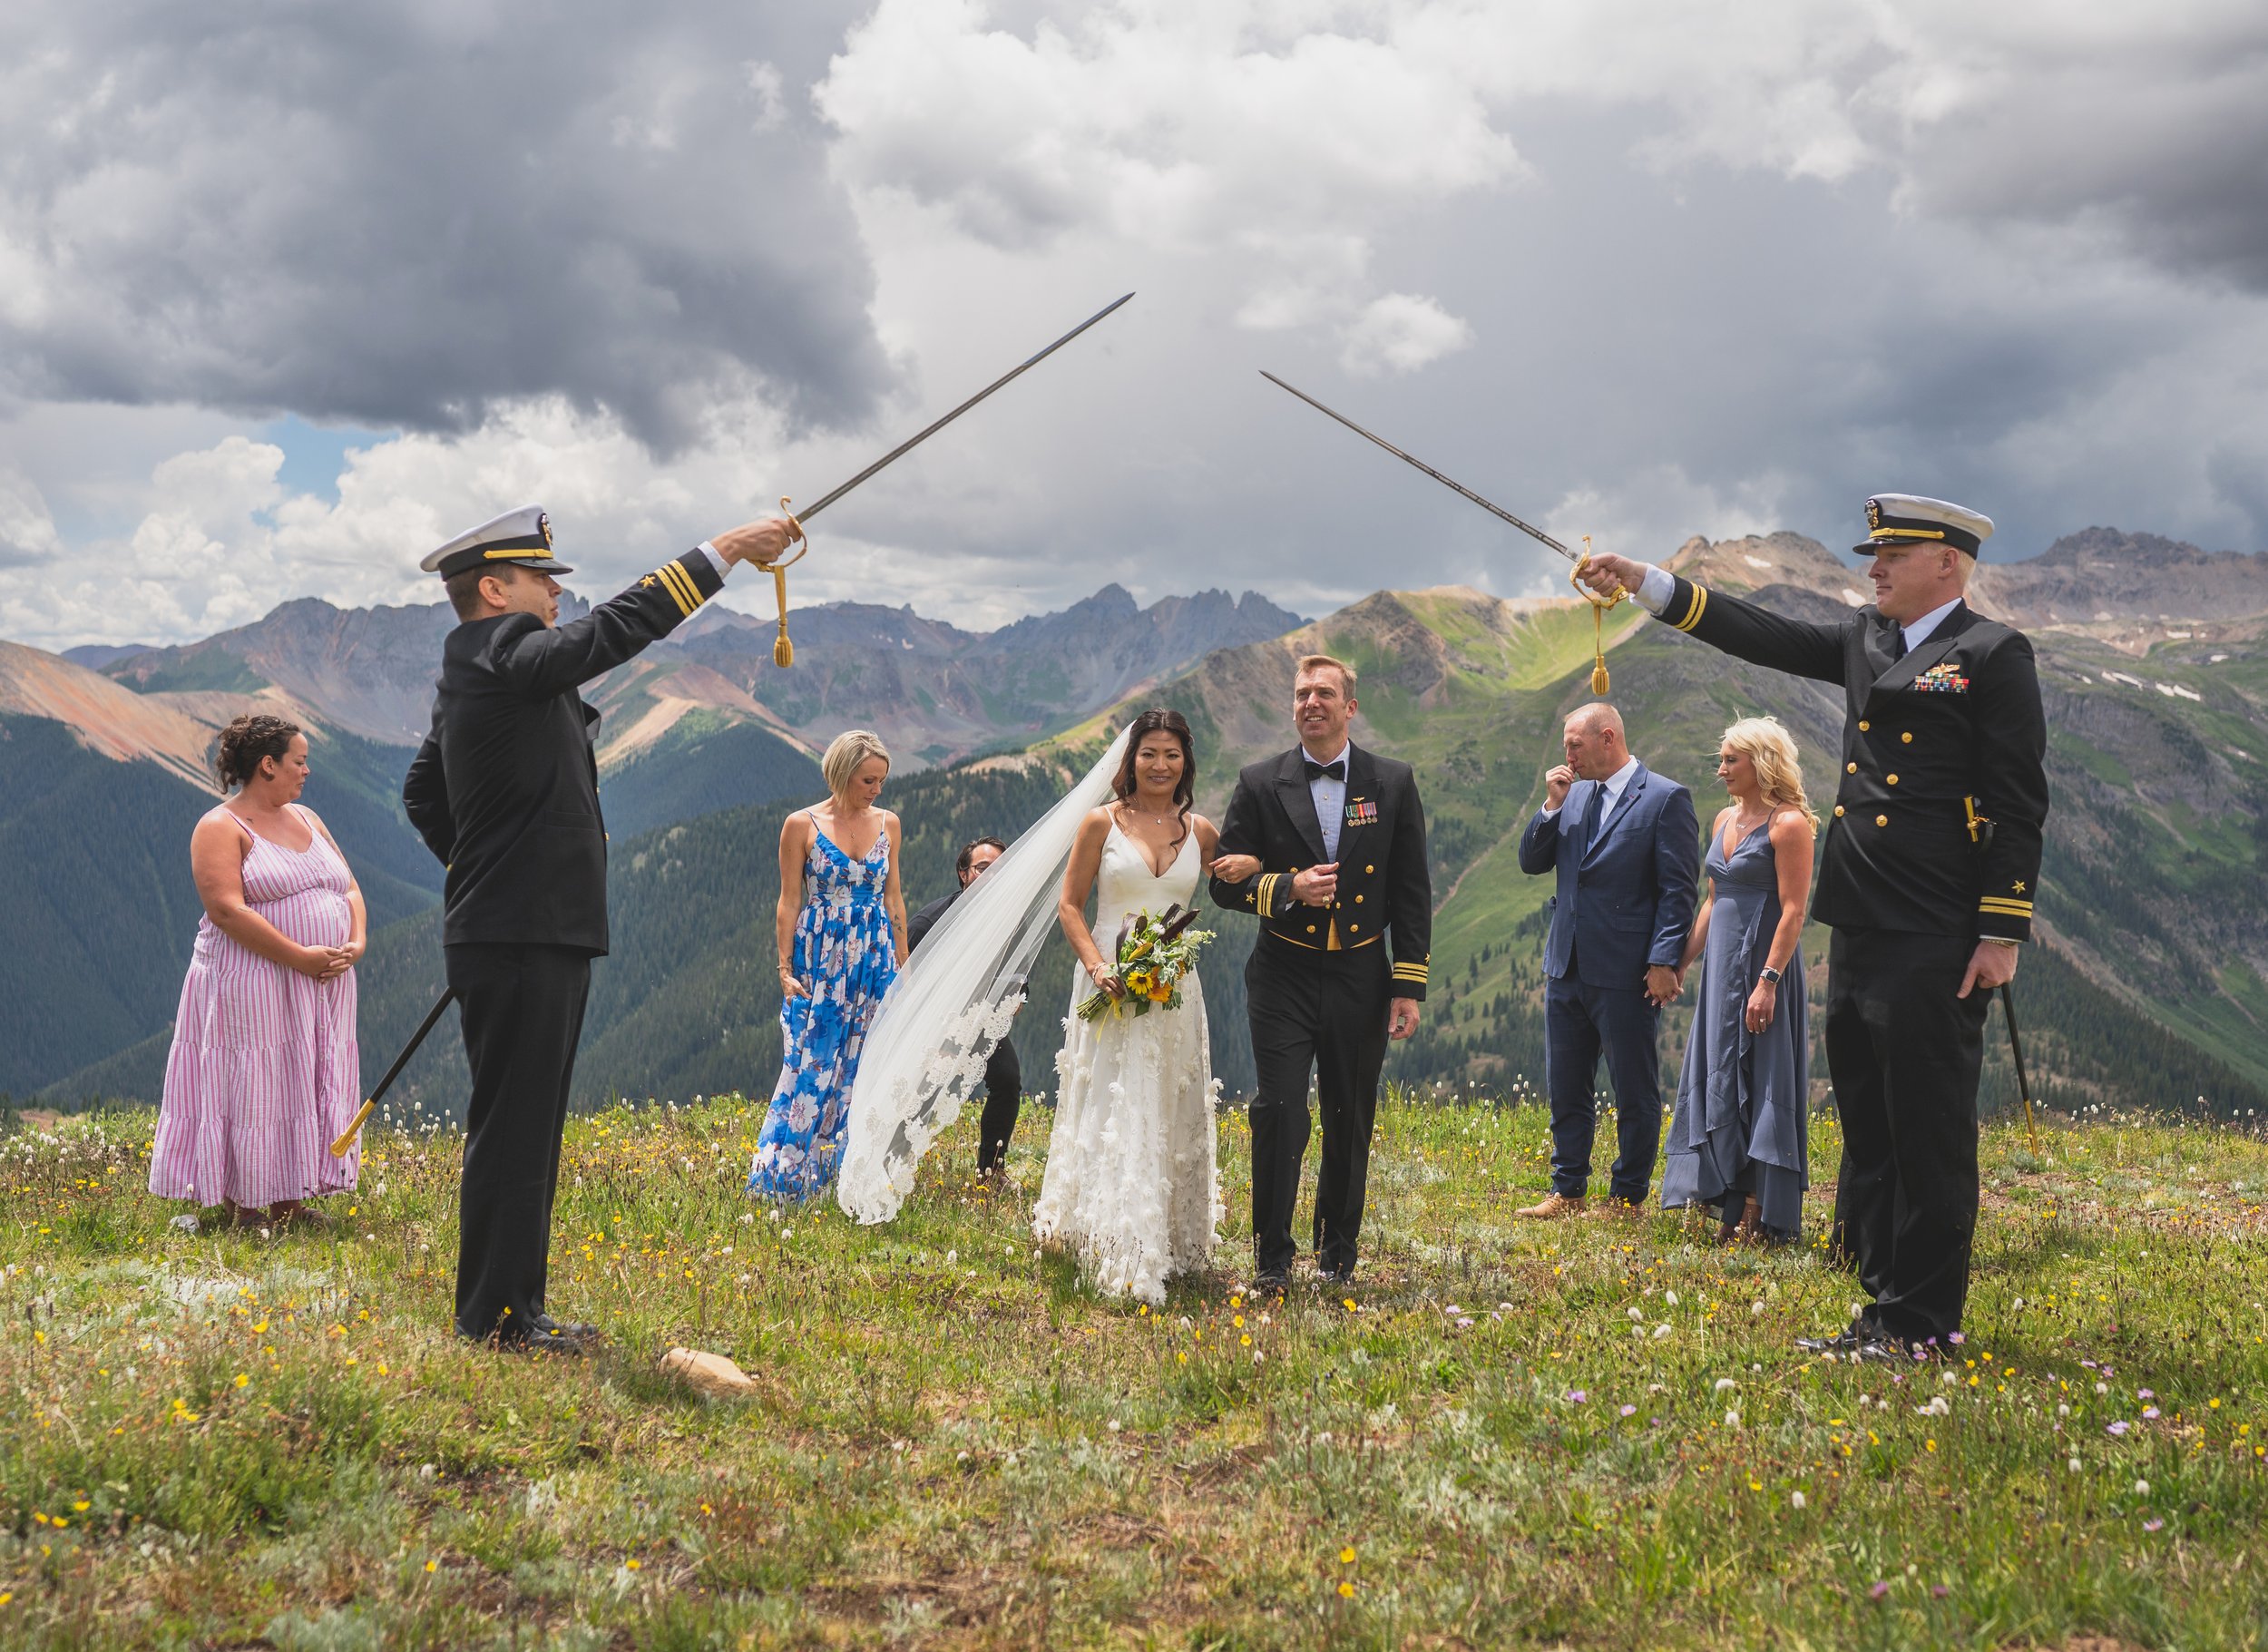 a military micro-wedding on a mountain in colorado featuring a rebecca schoneveld wedding dress